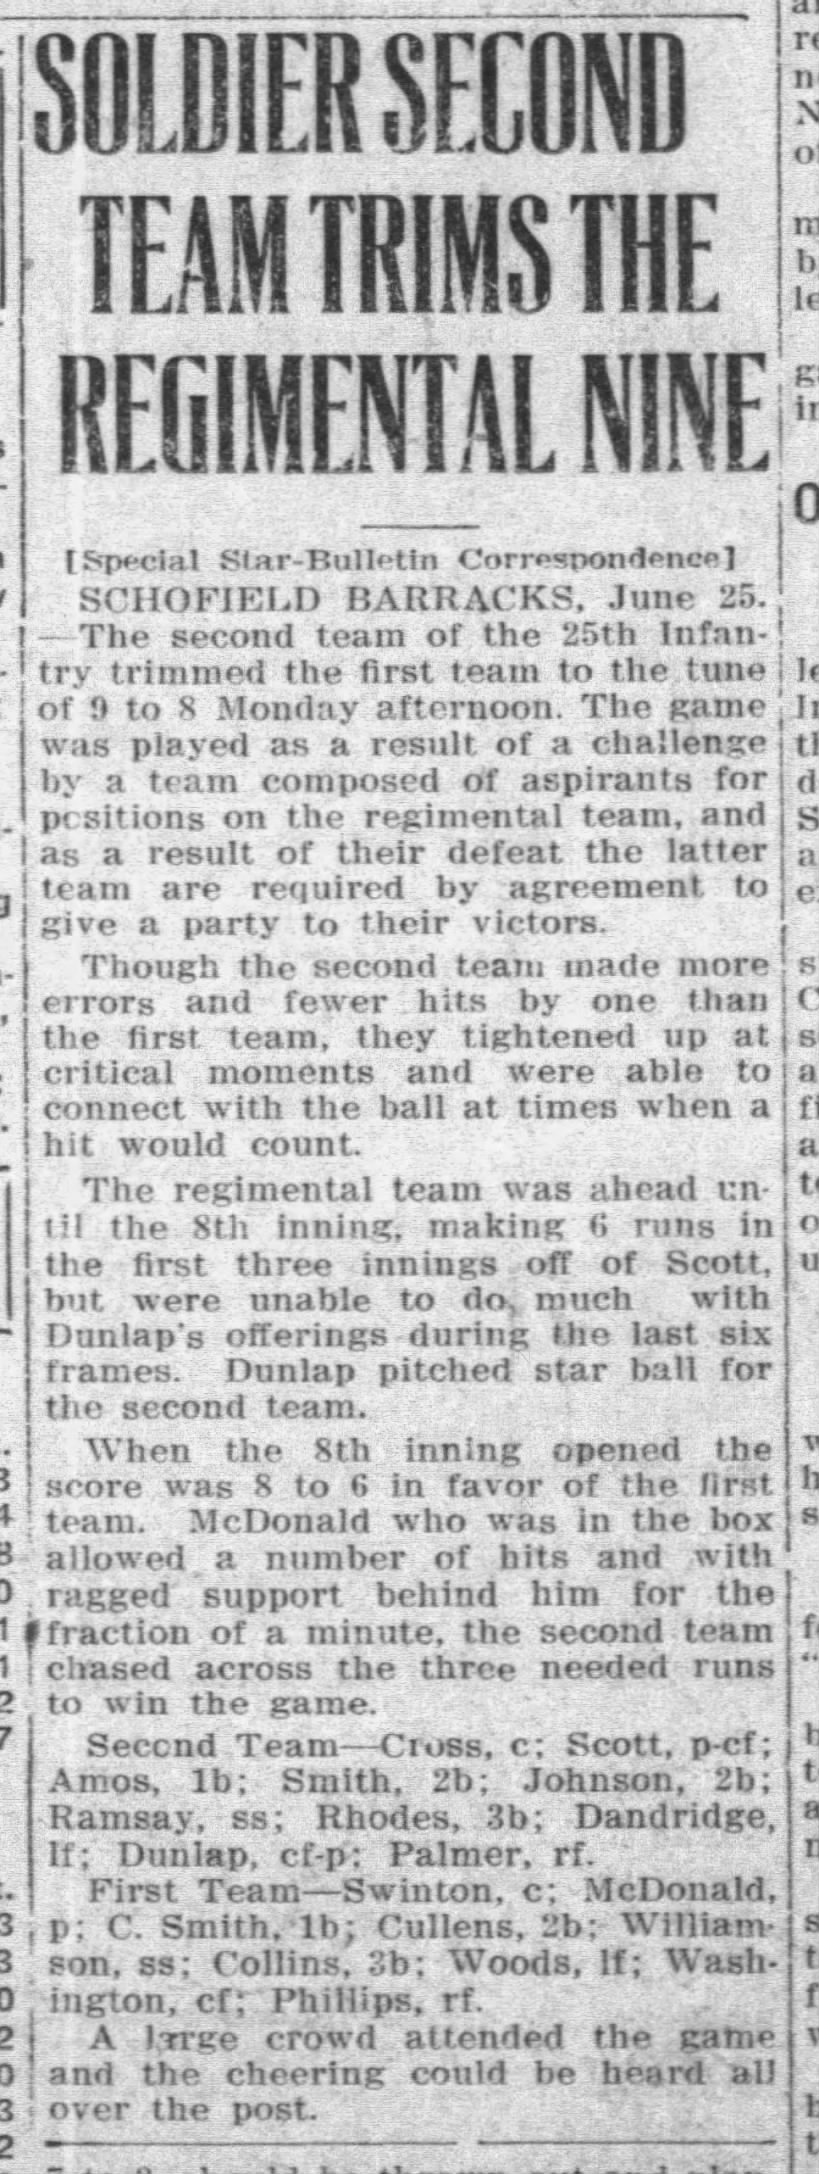 6/24/1914 vs 2nd team